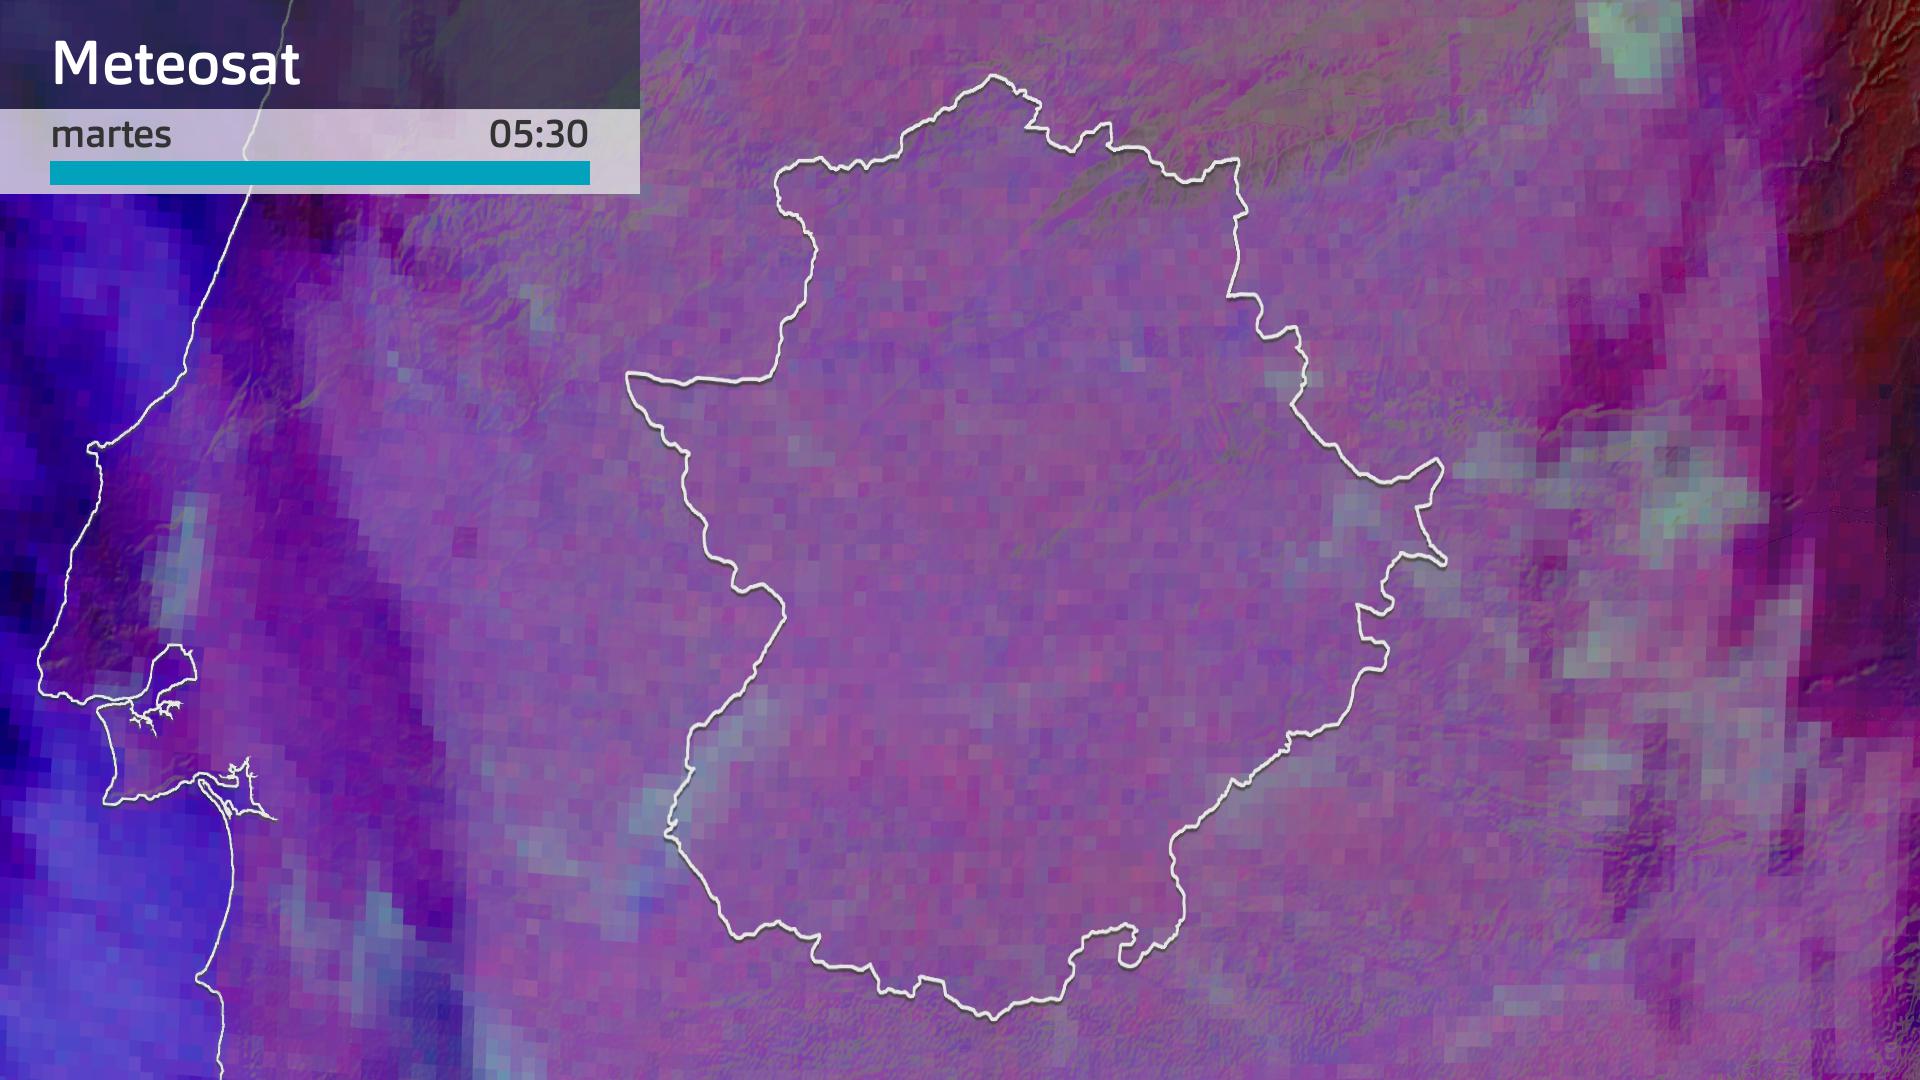 Imagen del Meteosat martes 30 de enero 5:30 h.